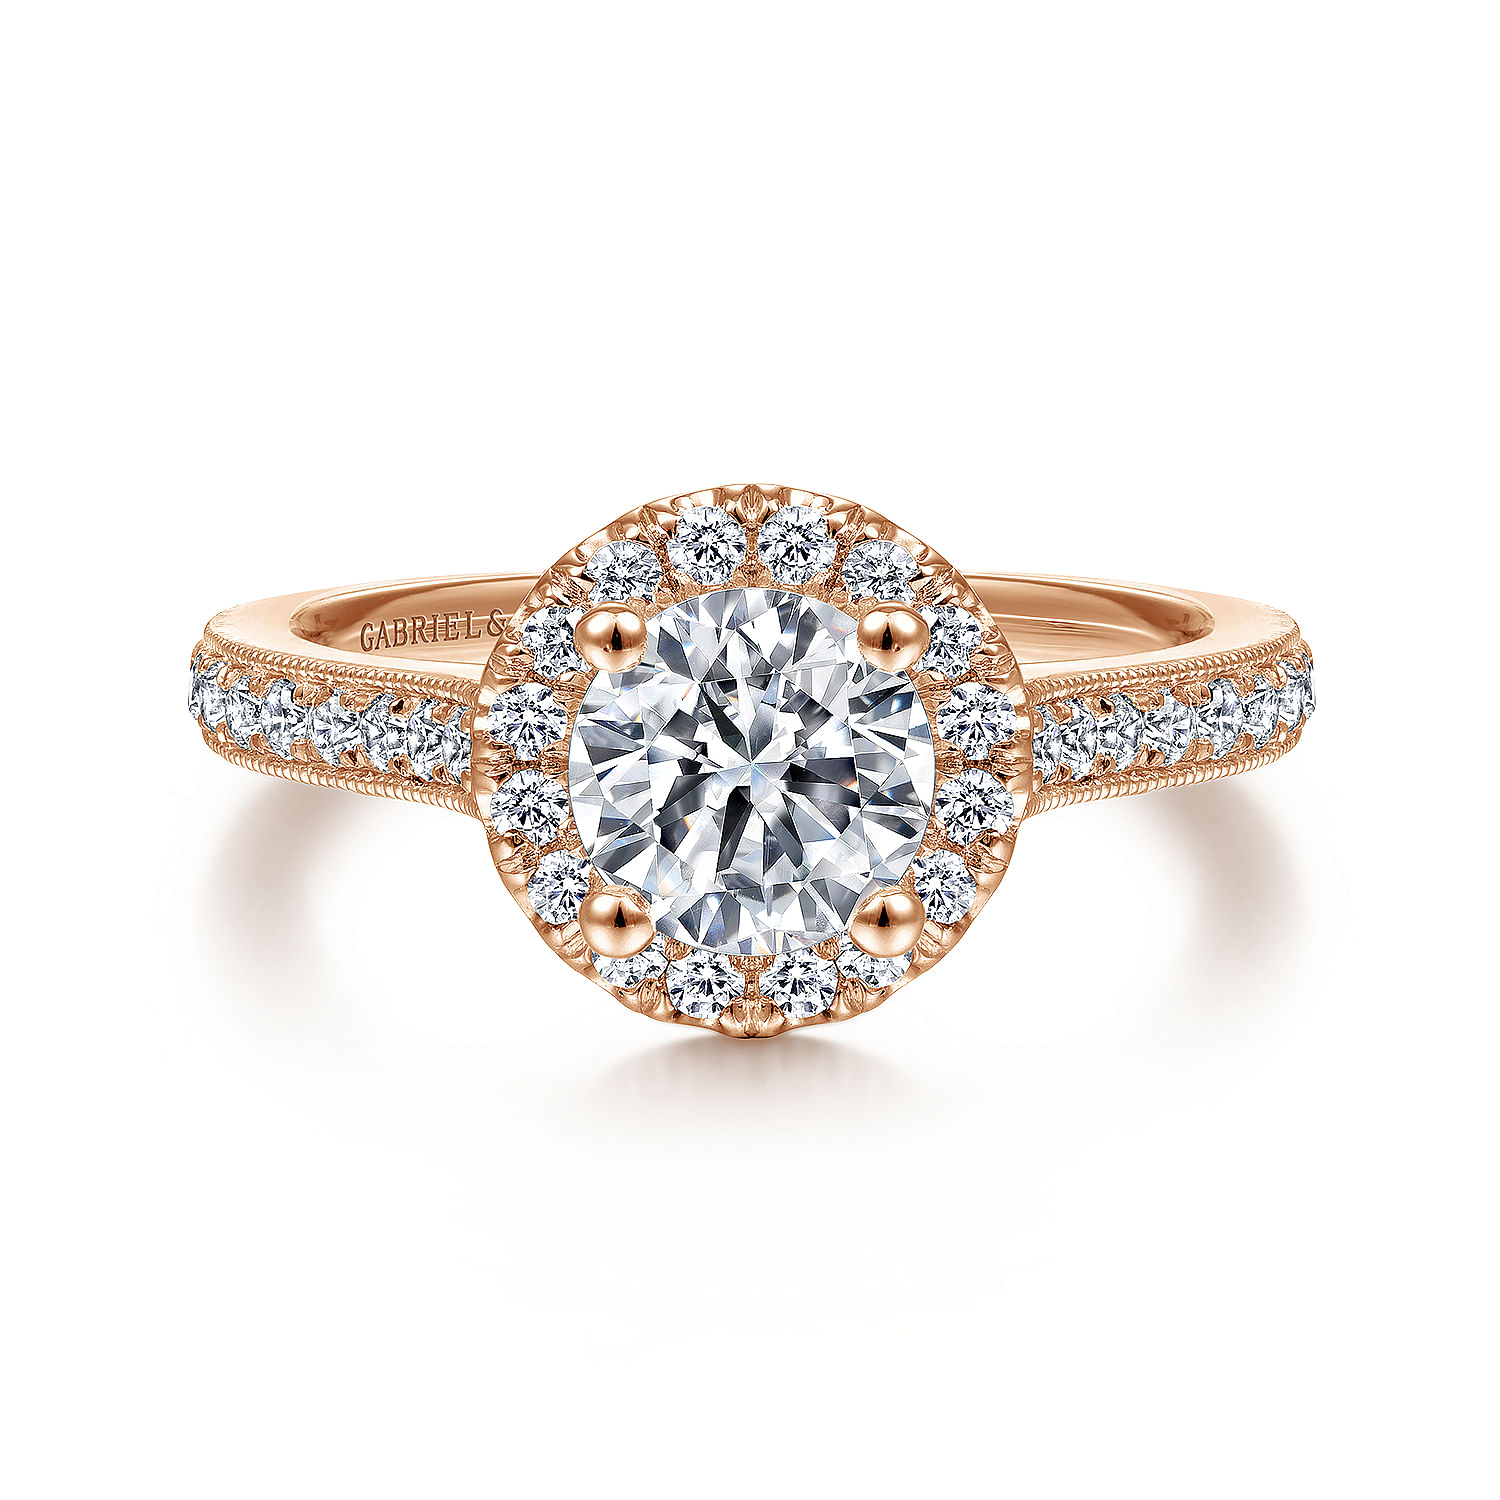 Bernadette - Vintage Inspired 14K Rose Gold Round Halo Diamond Engagement Ring